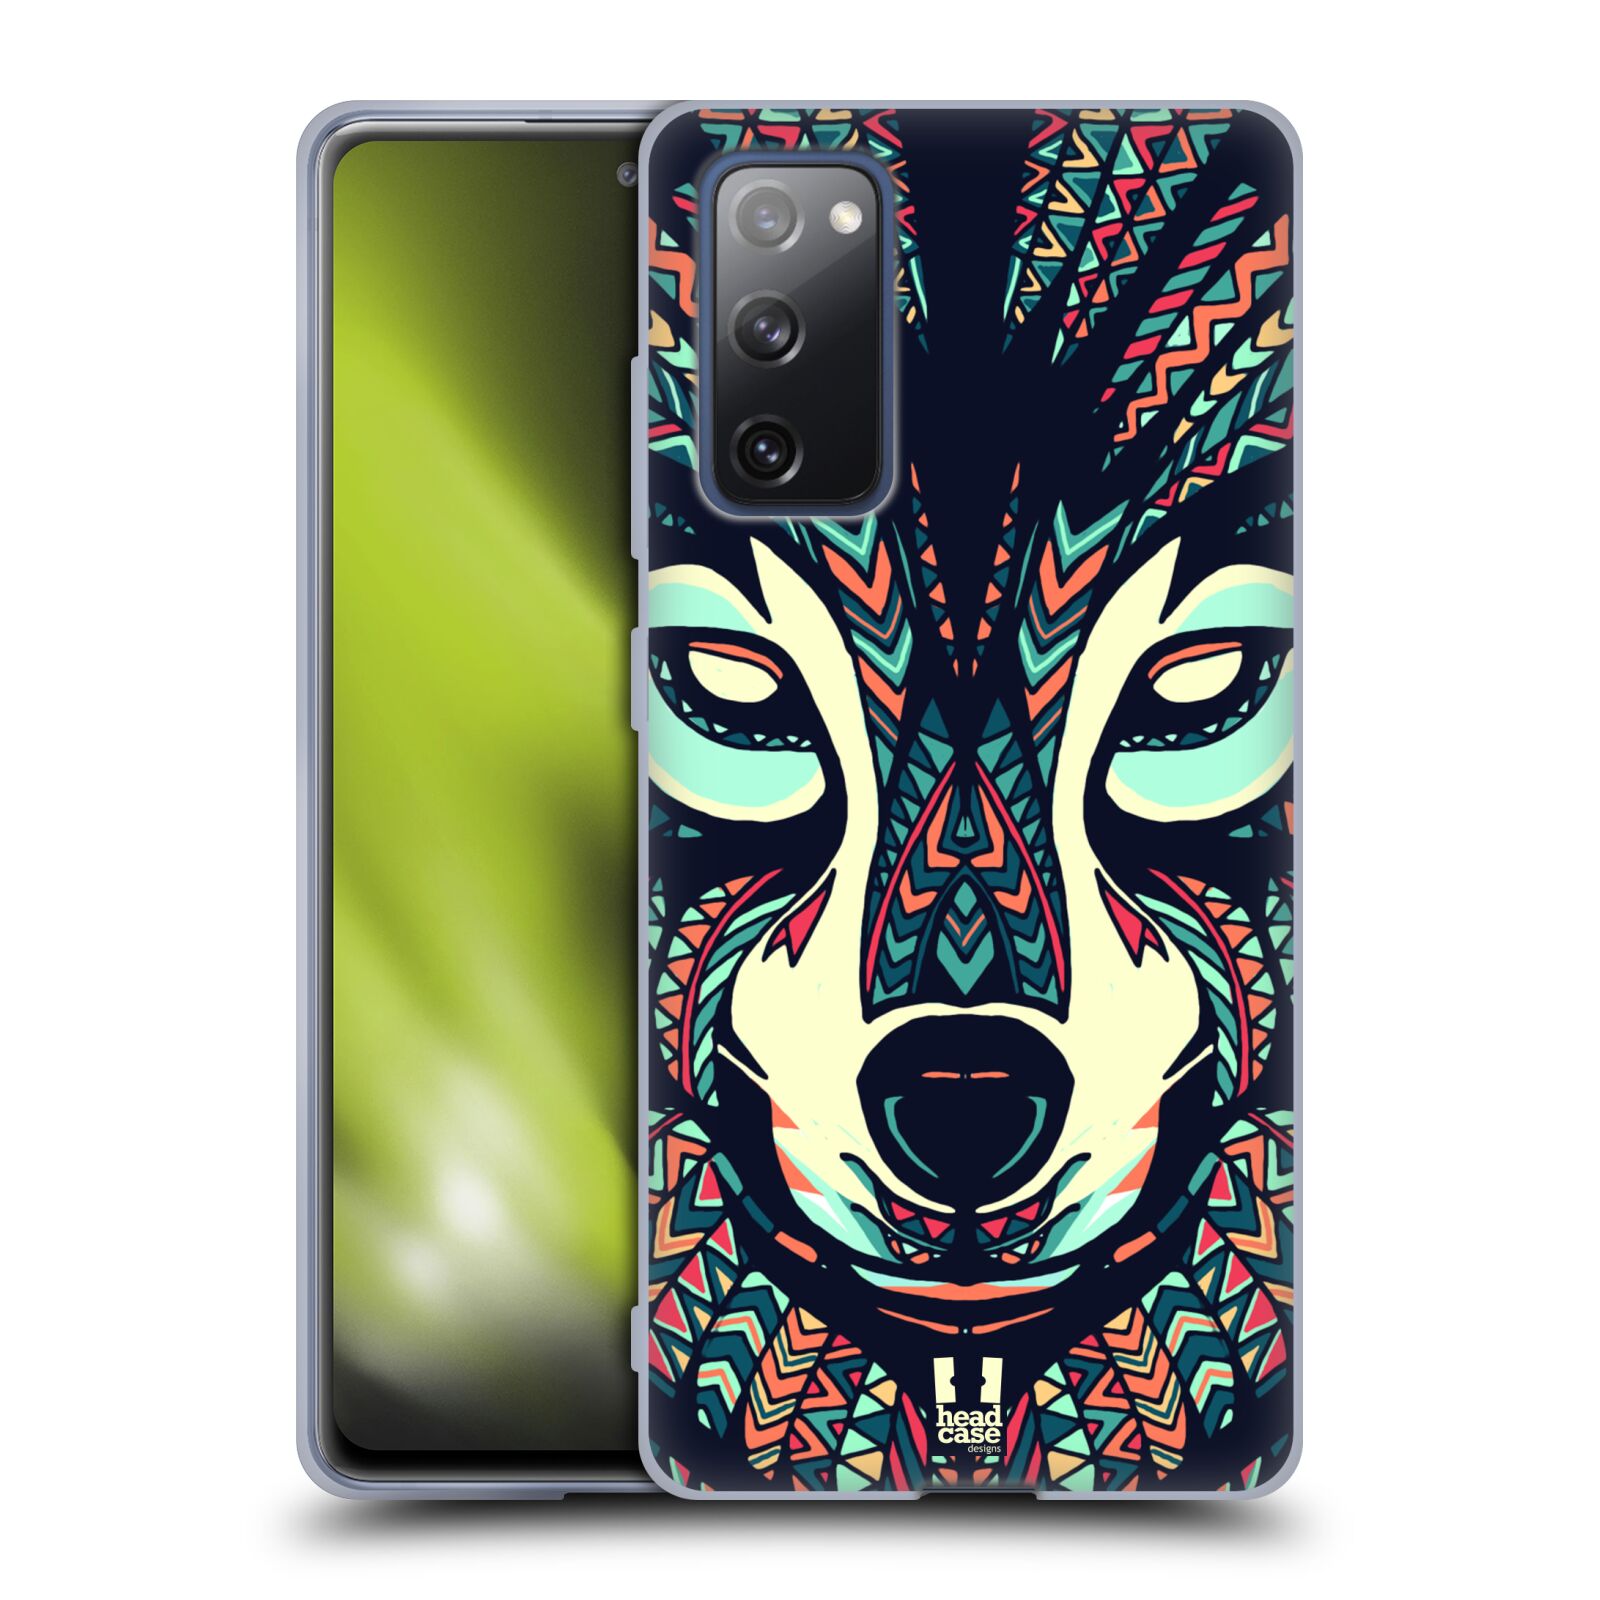 Plastový obal HEAD CASE na mobil Samsung Galaxy S20 FE / S20 FE 5G vzor Aztécký motiv zvíře 3 vlk